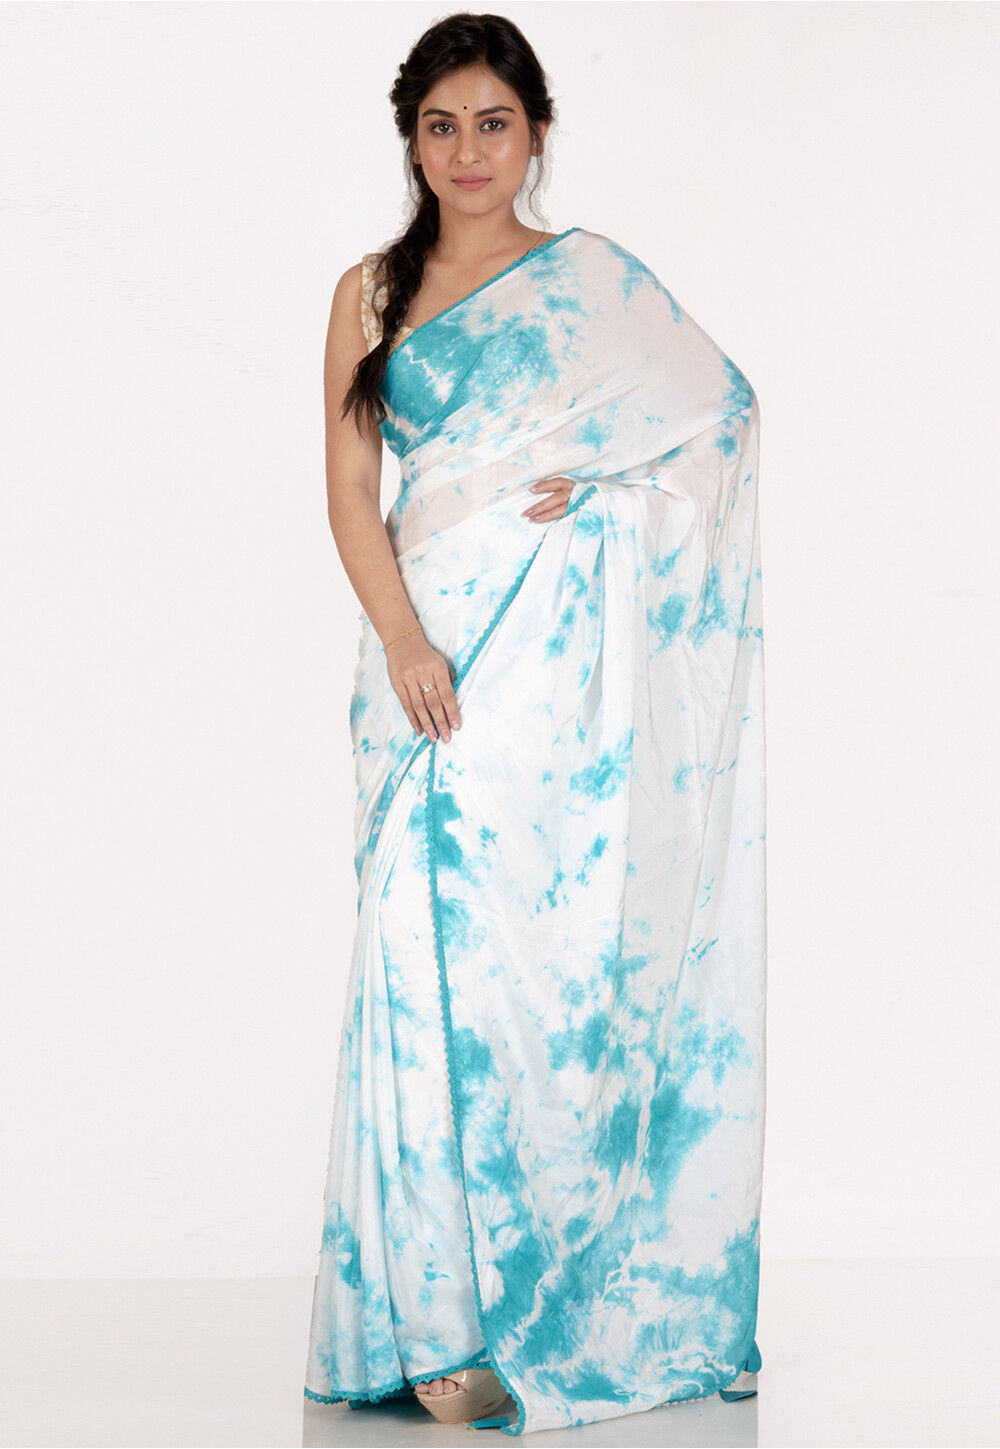 Tie and Dye - Dori Work - Sarees: Buy Latest Indian Sarees Collection  Online | Utsav Fashion